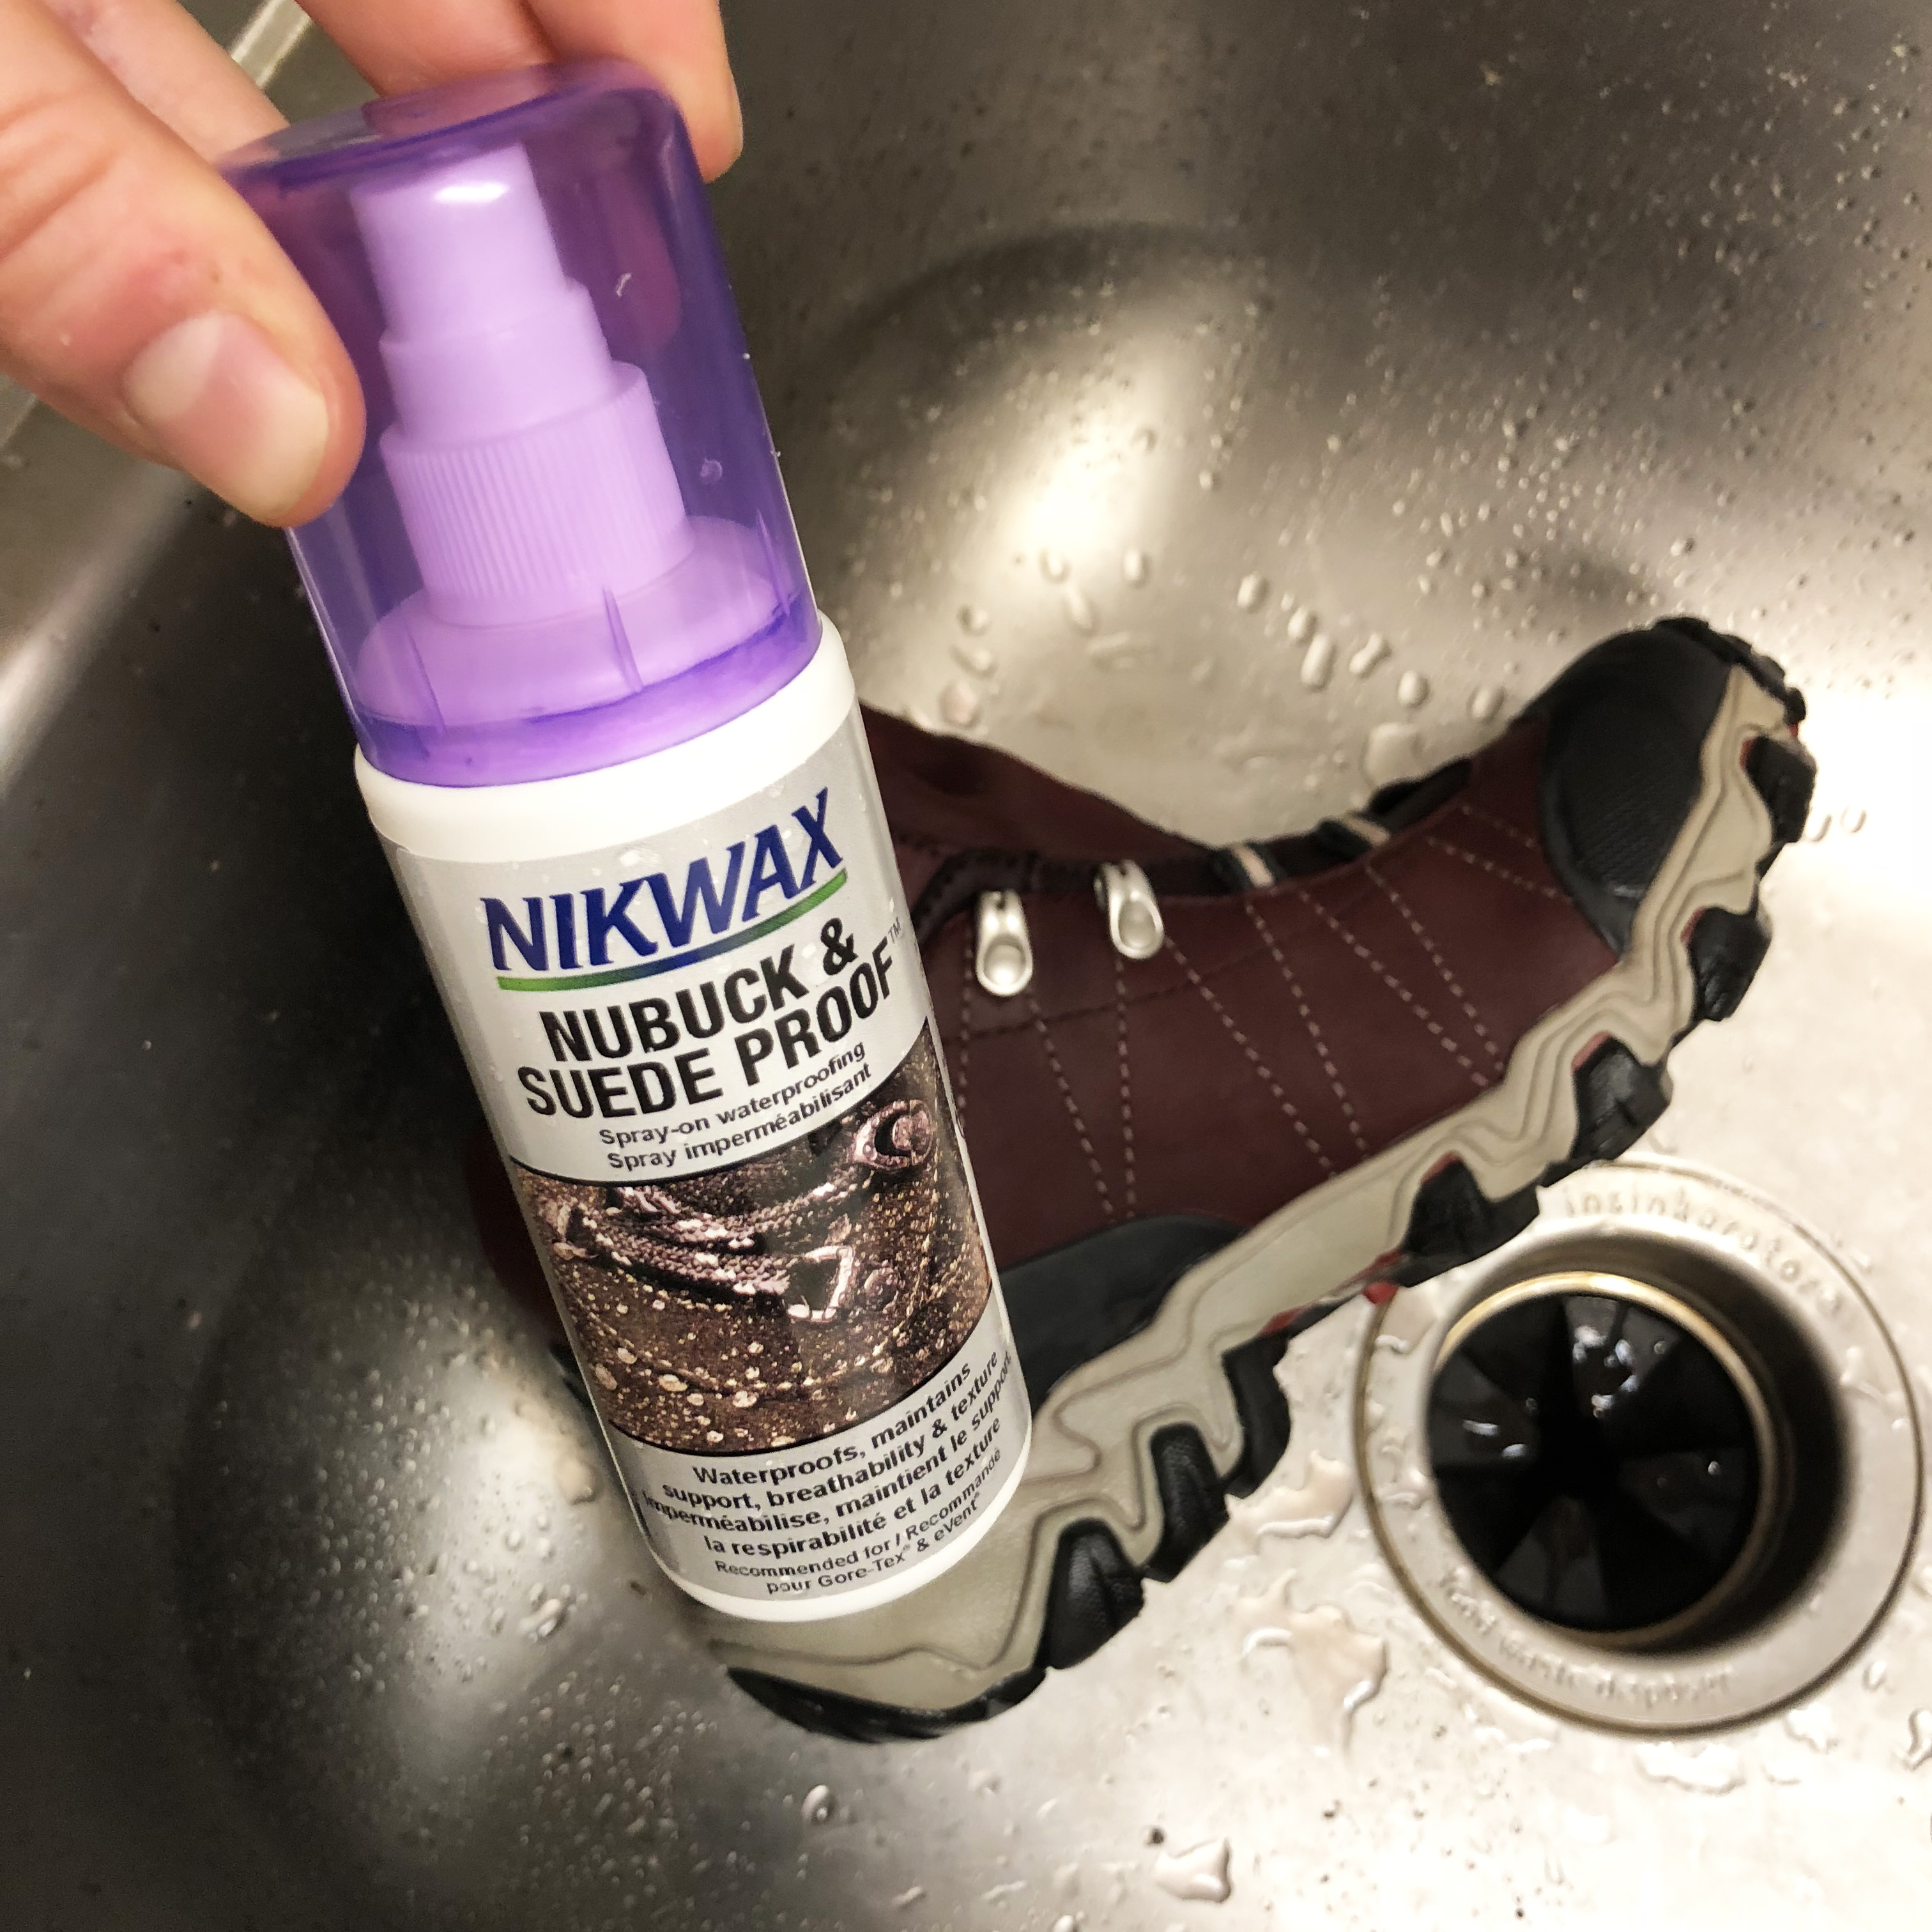 nikwax nubuck and suede proof spray